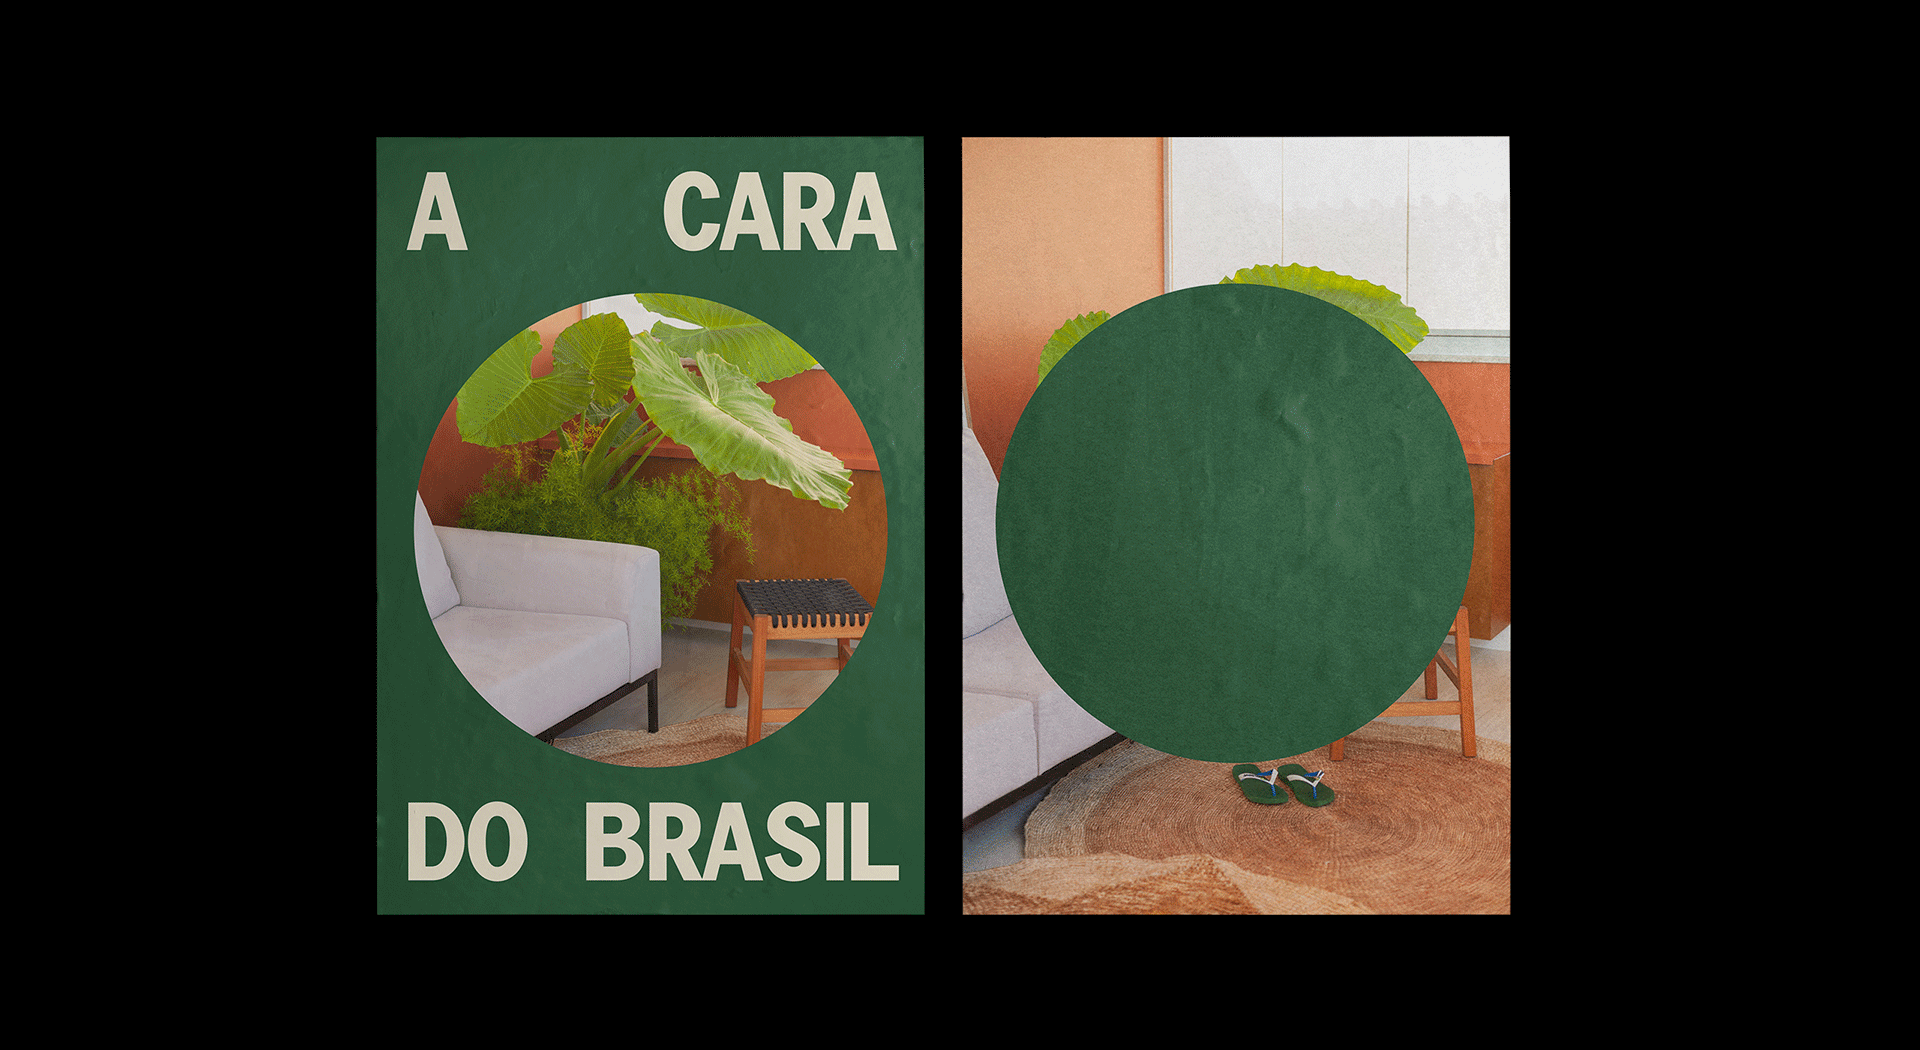 Monga’s Id for Badara: A cara do Brasil